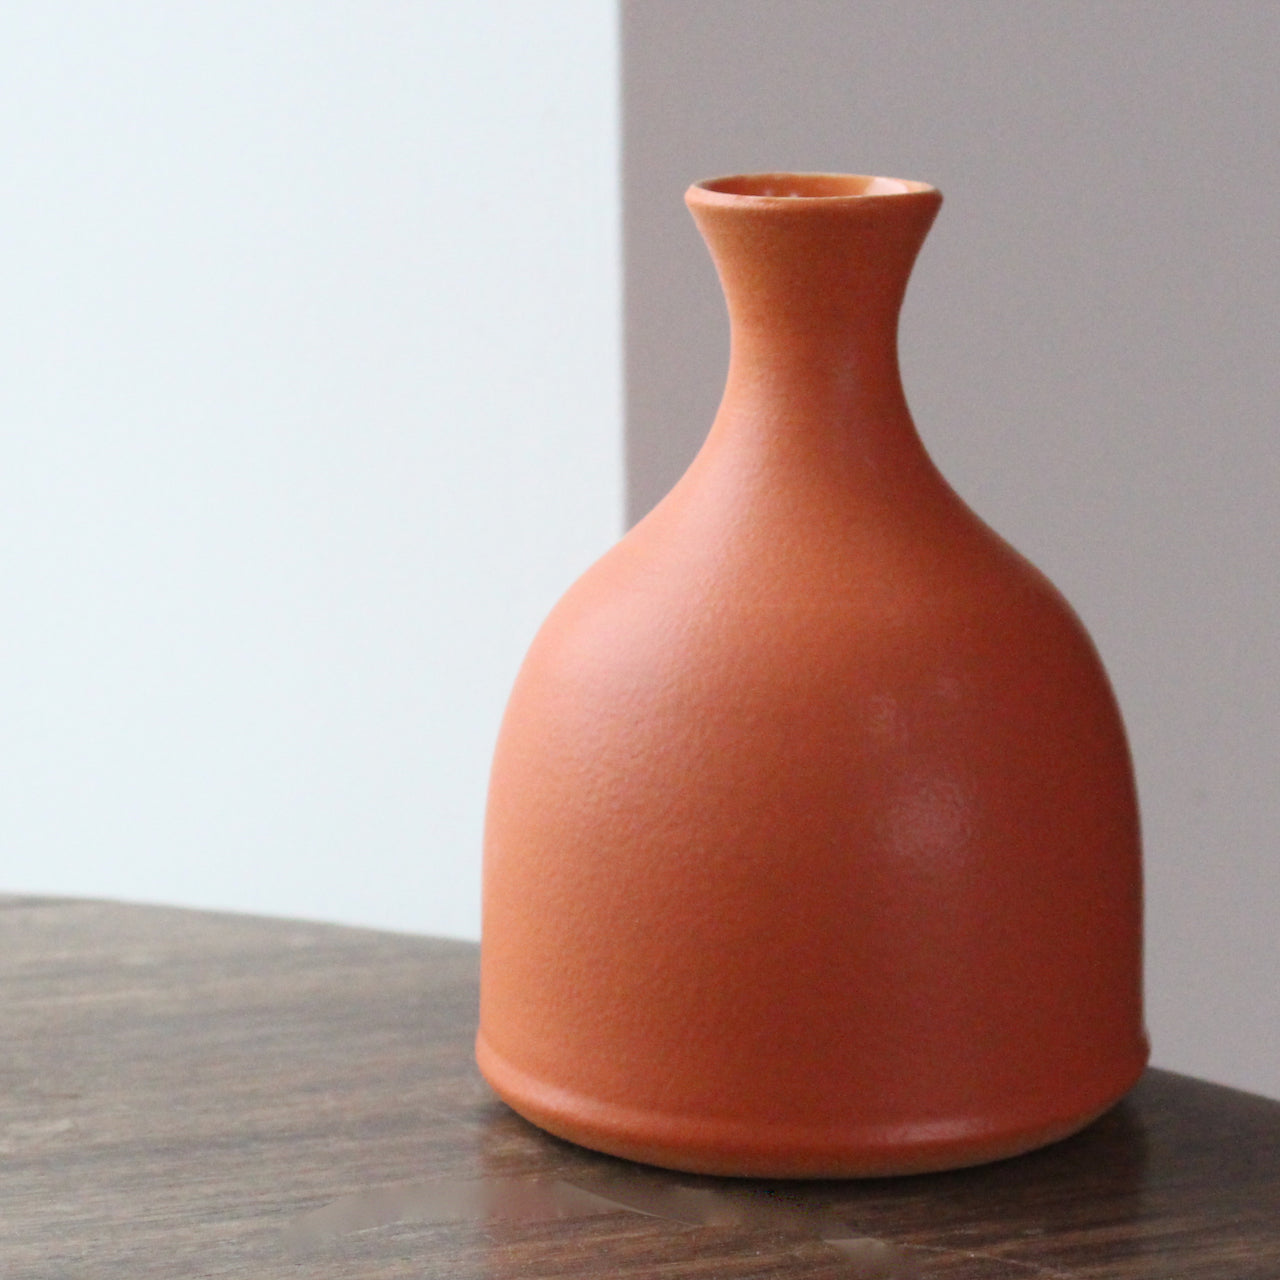  Lucy Burley small orange coloured ceramic bud vase 